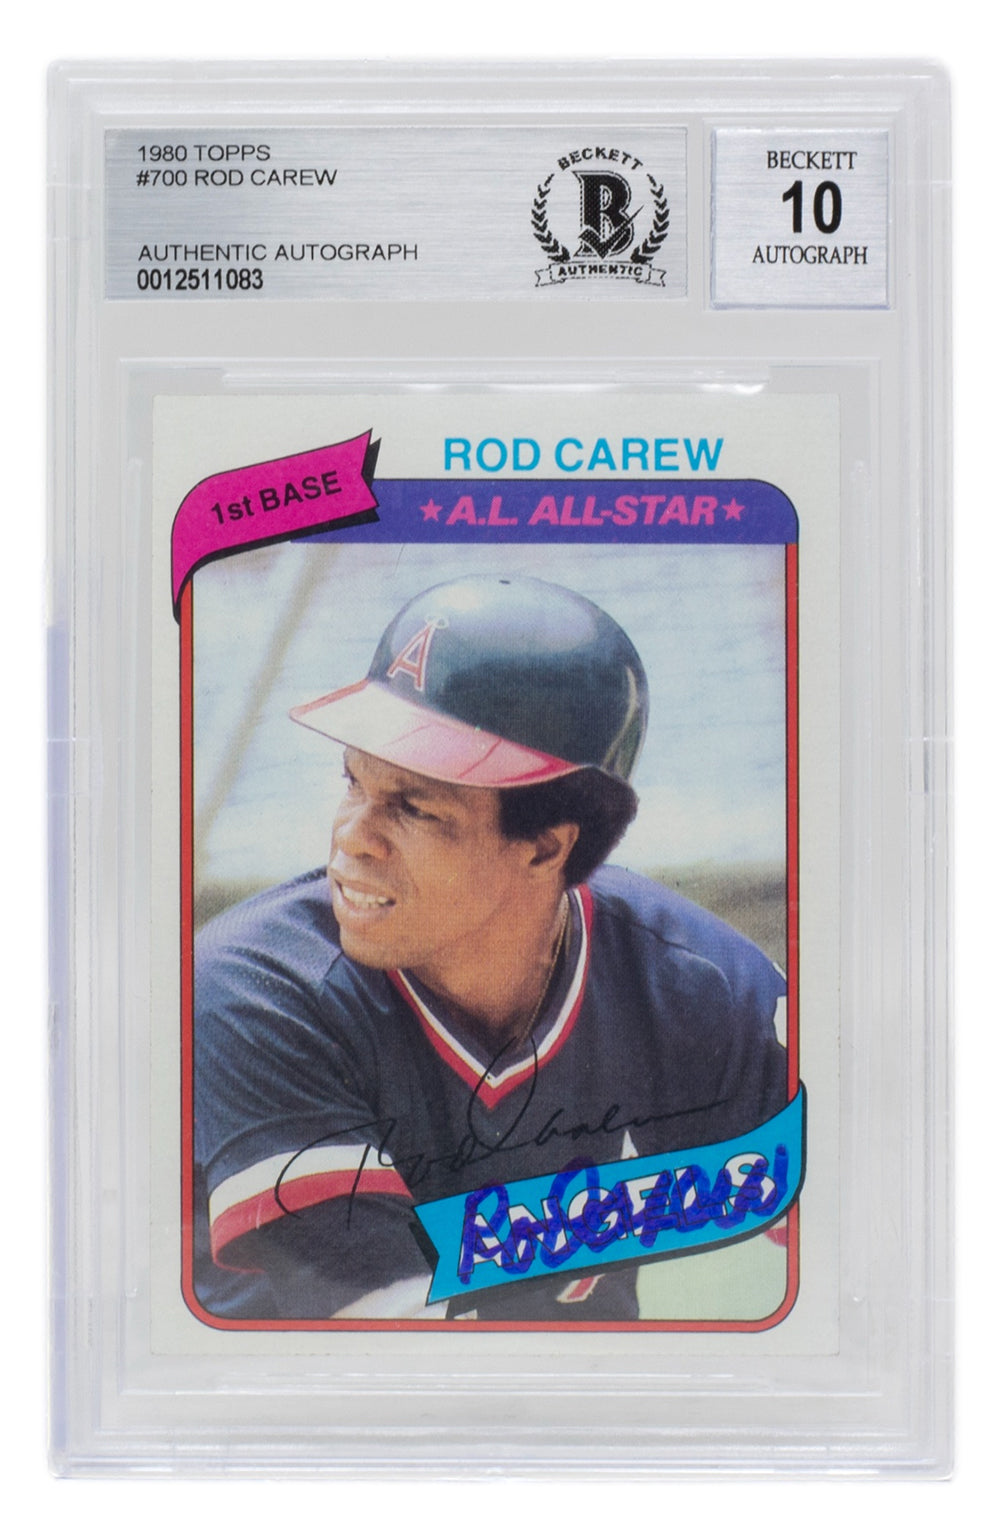 Rod Carew Signed 1980 Angels Topps Card #700 Baseball Card BAS 10